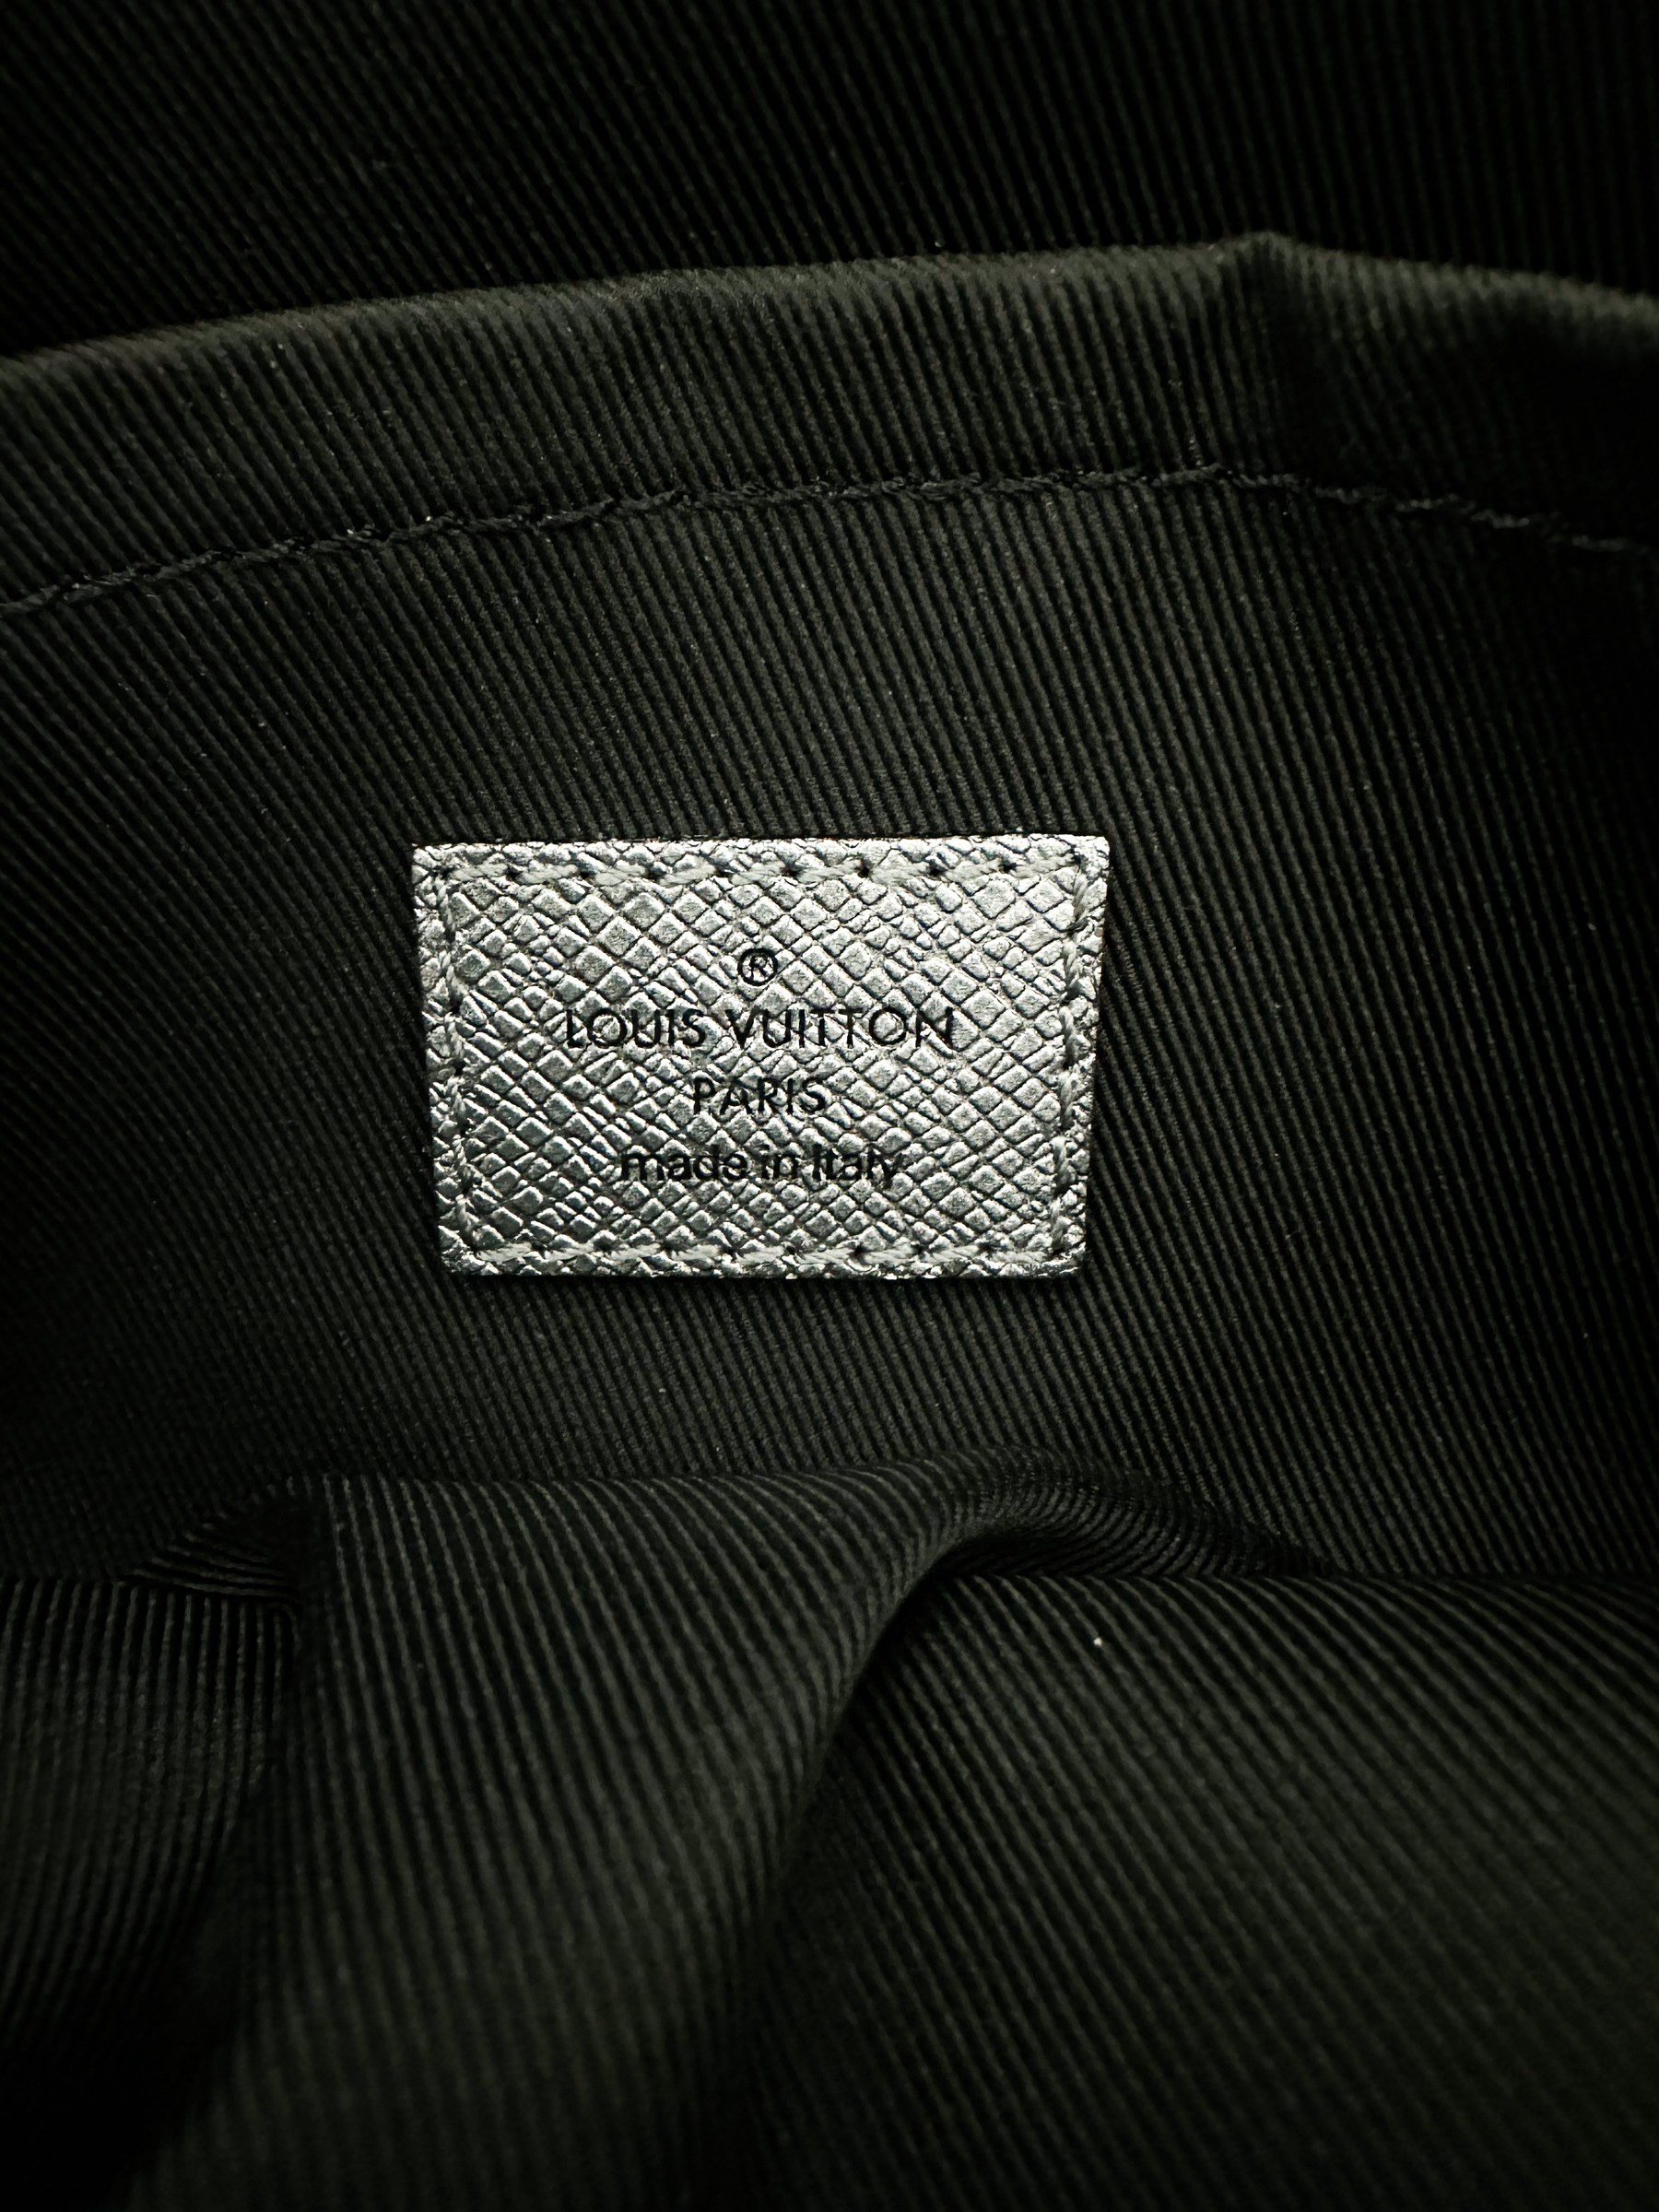 Louis Vuitton Messenger Discovery Black Canvas Shoulder Bag (Pre-Owned)